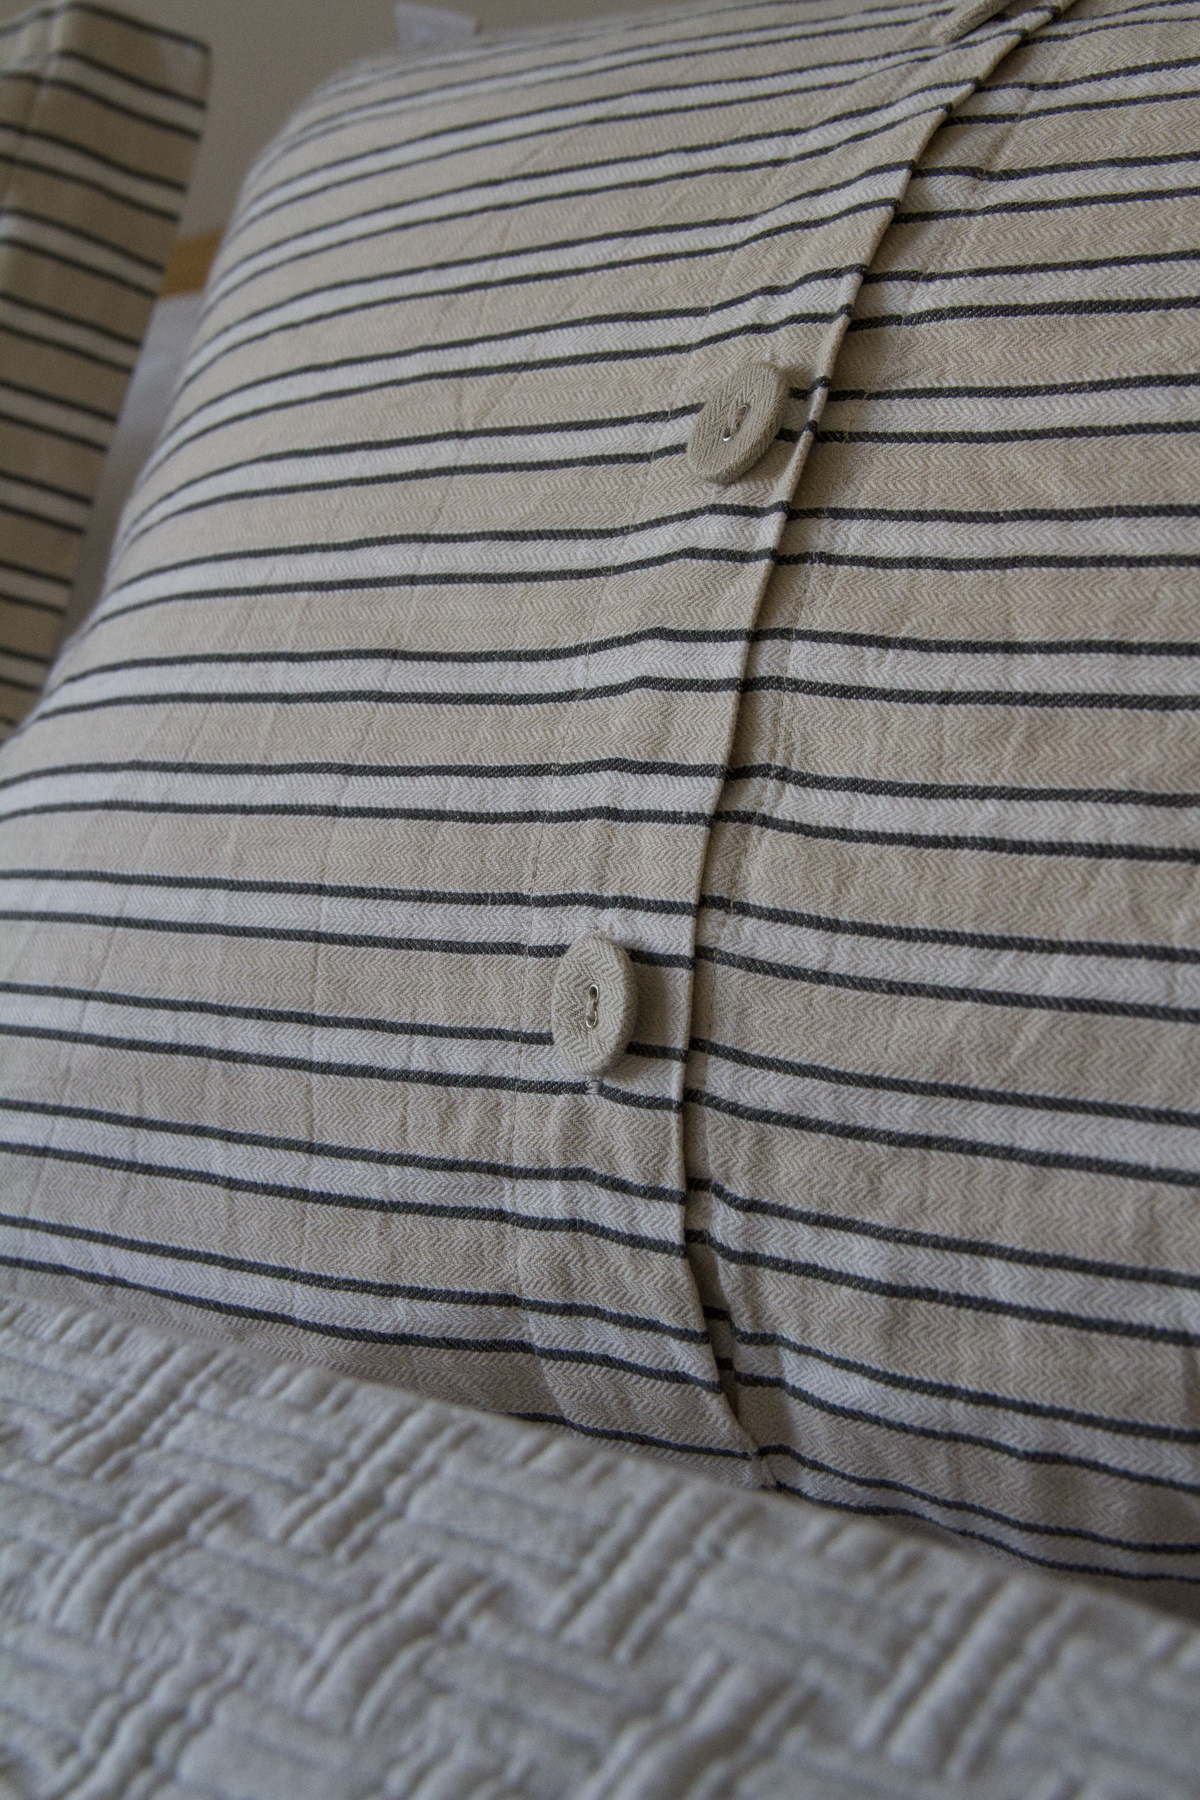 detailed shot of linens